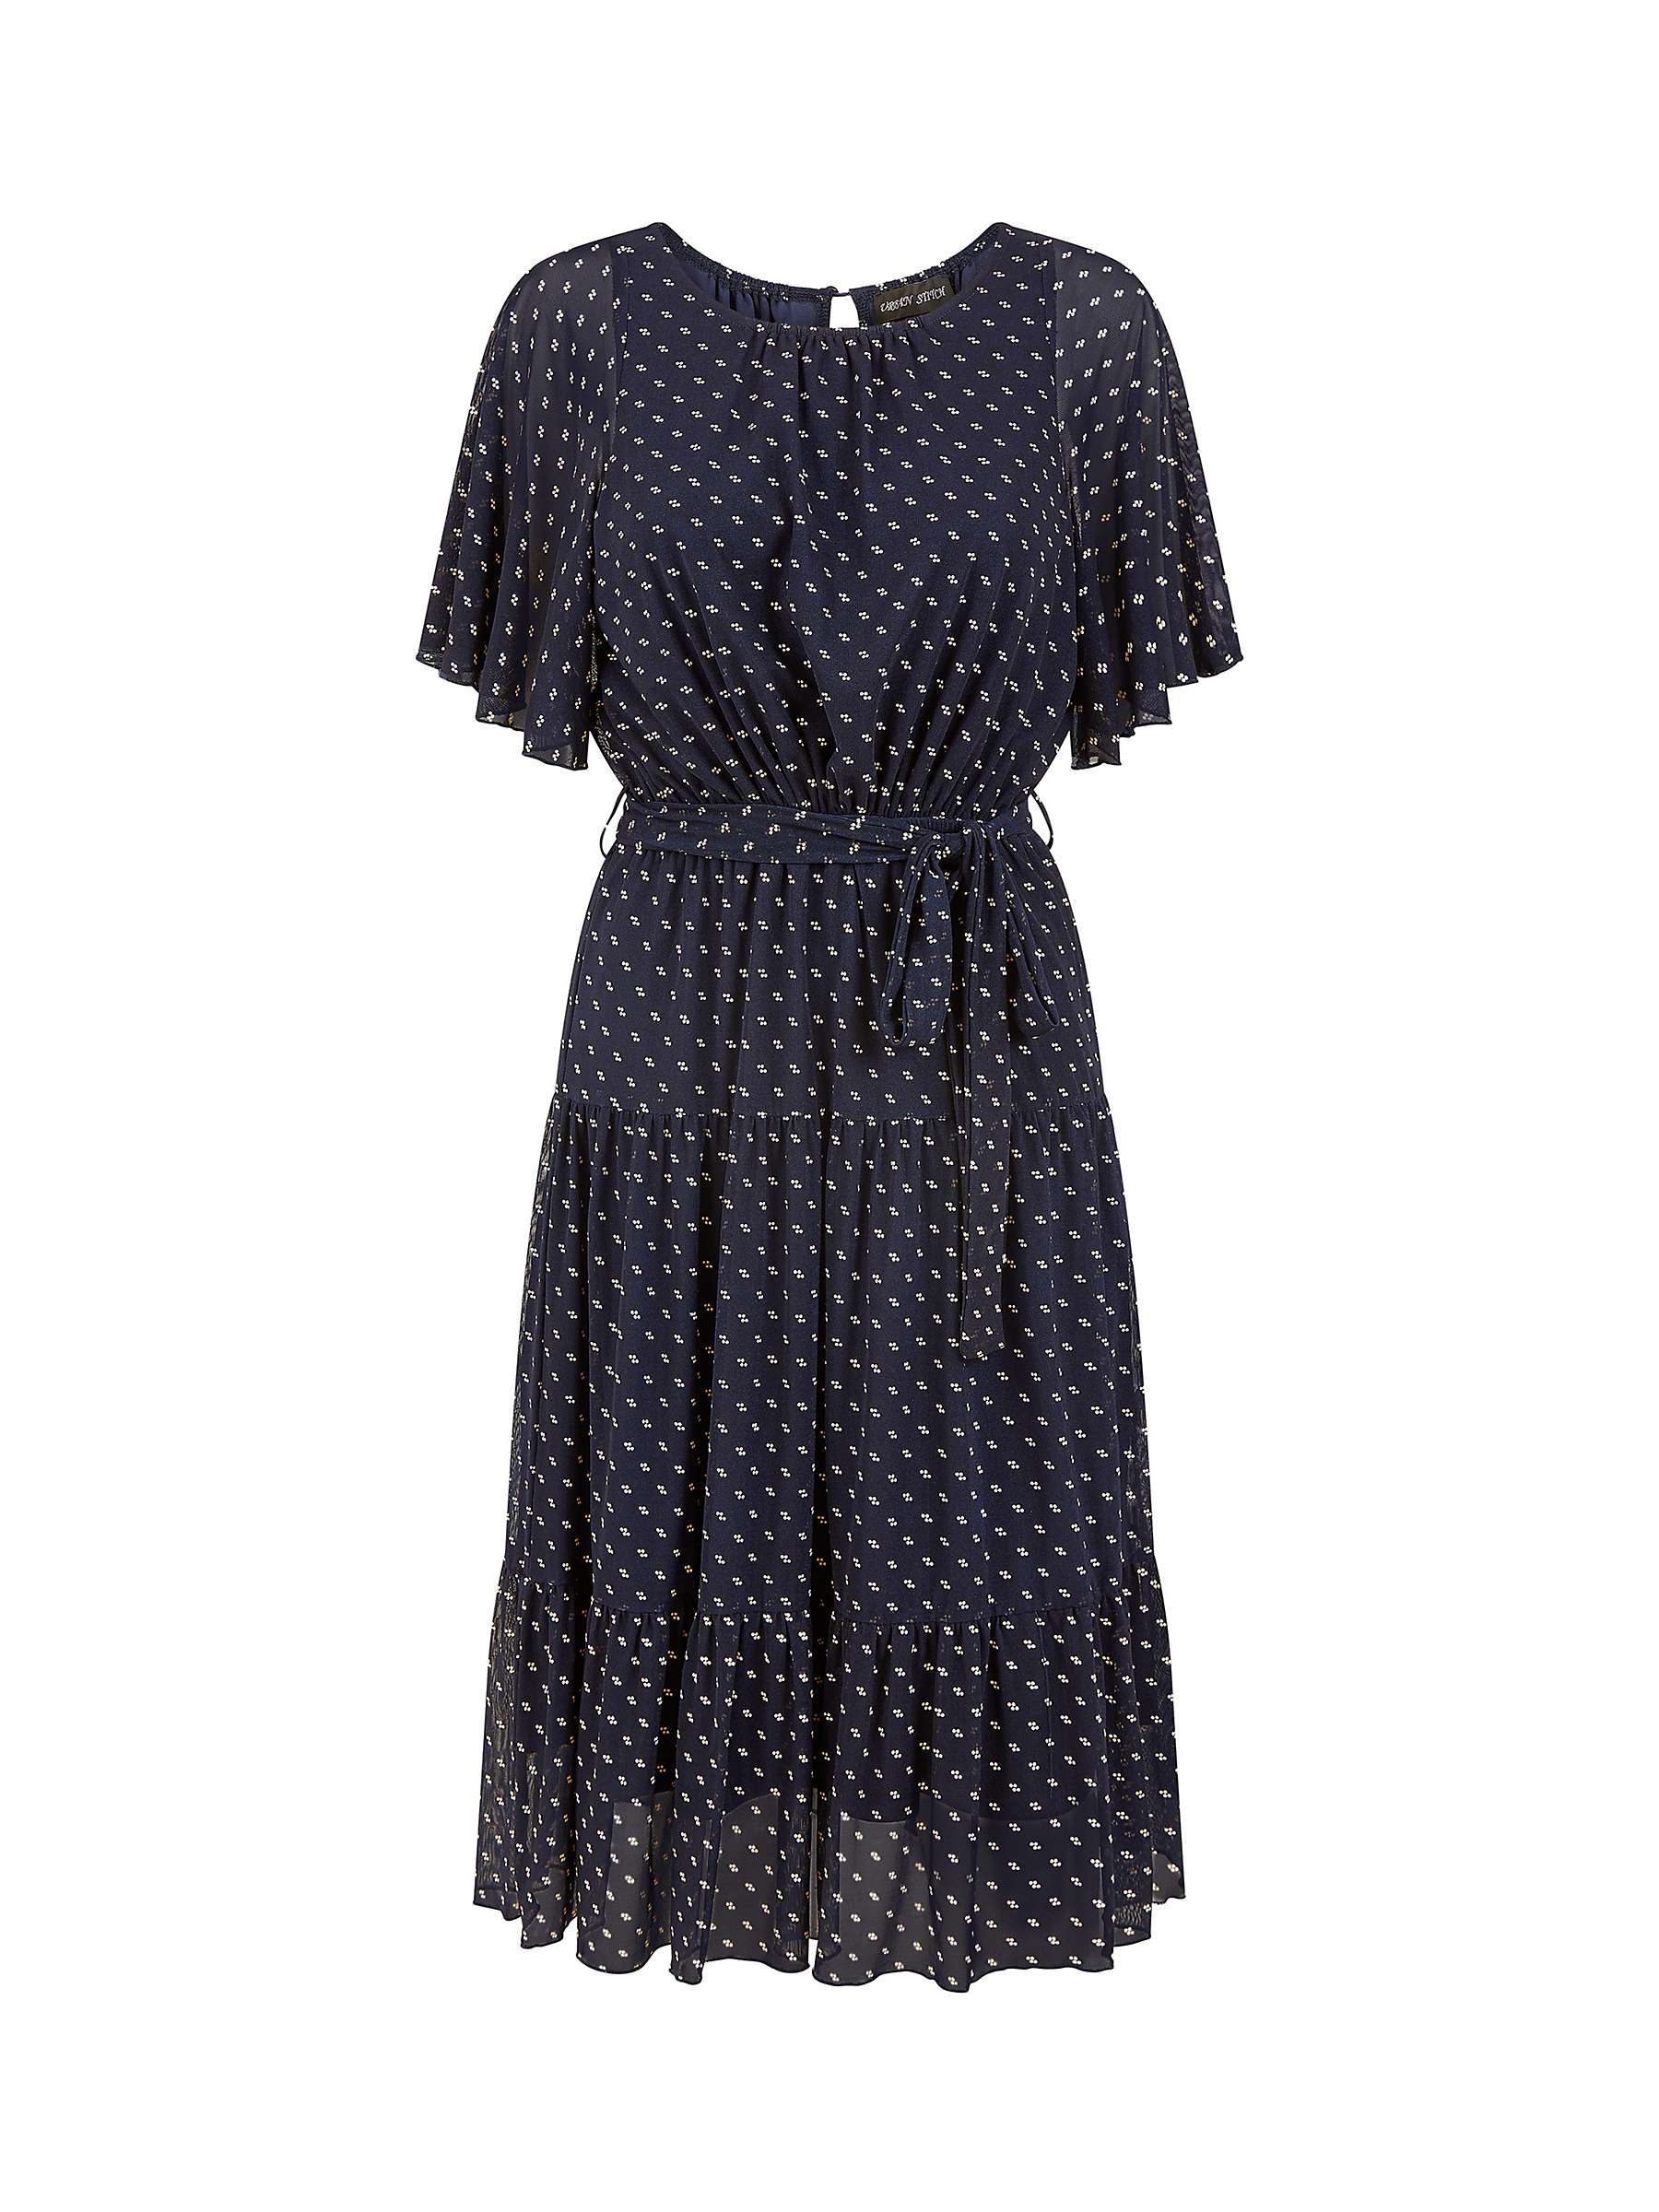 Buy Mela London Dot Print Mesh Dress, Navy Online at johnlewis.com